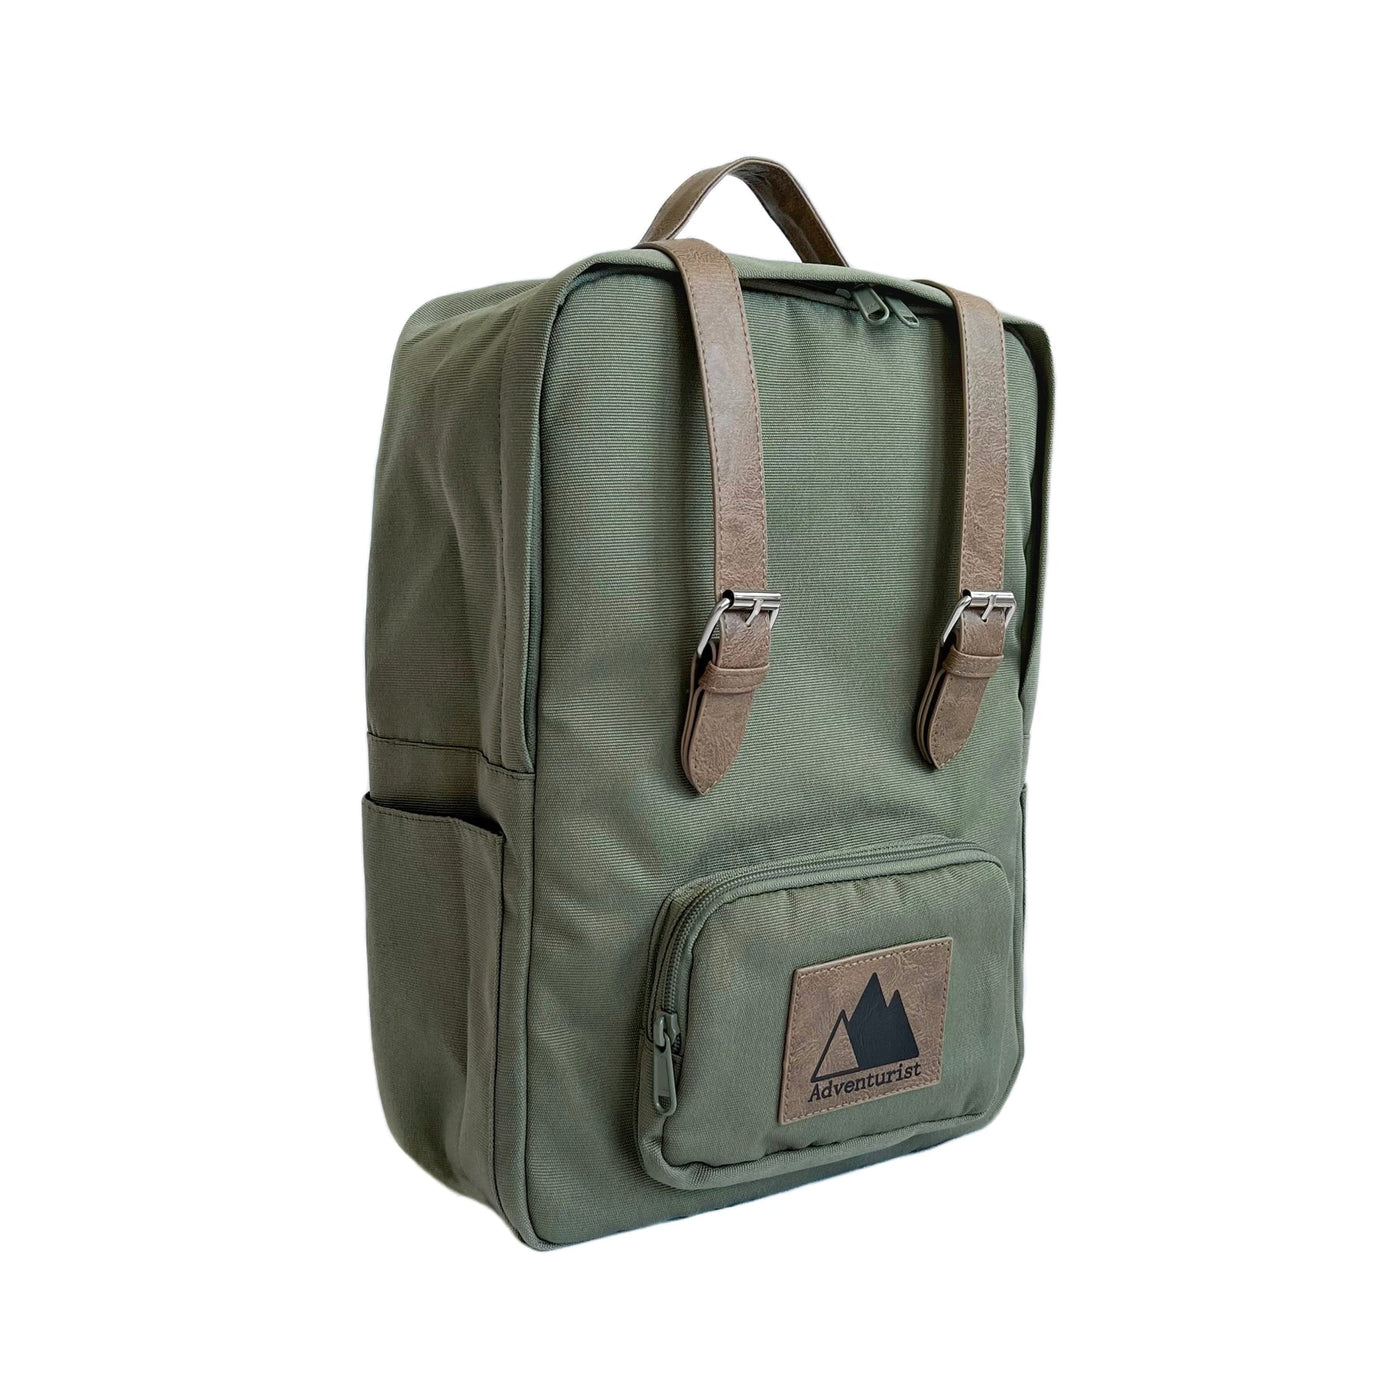 Adventurist Classic Backpack - Pine